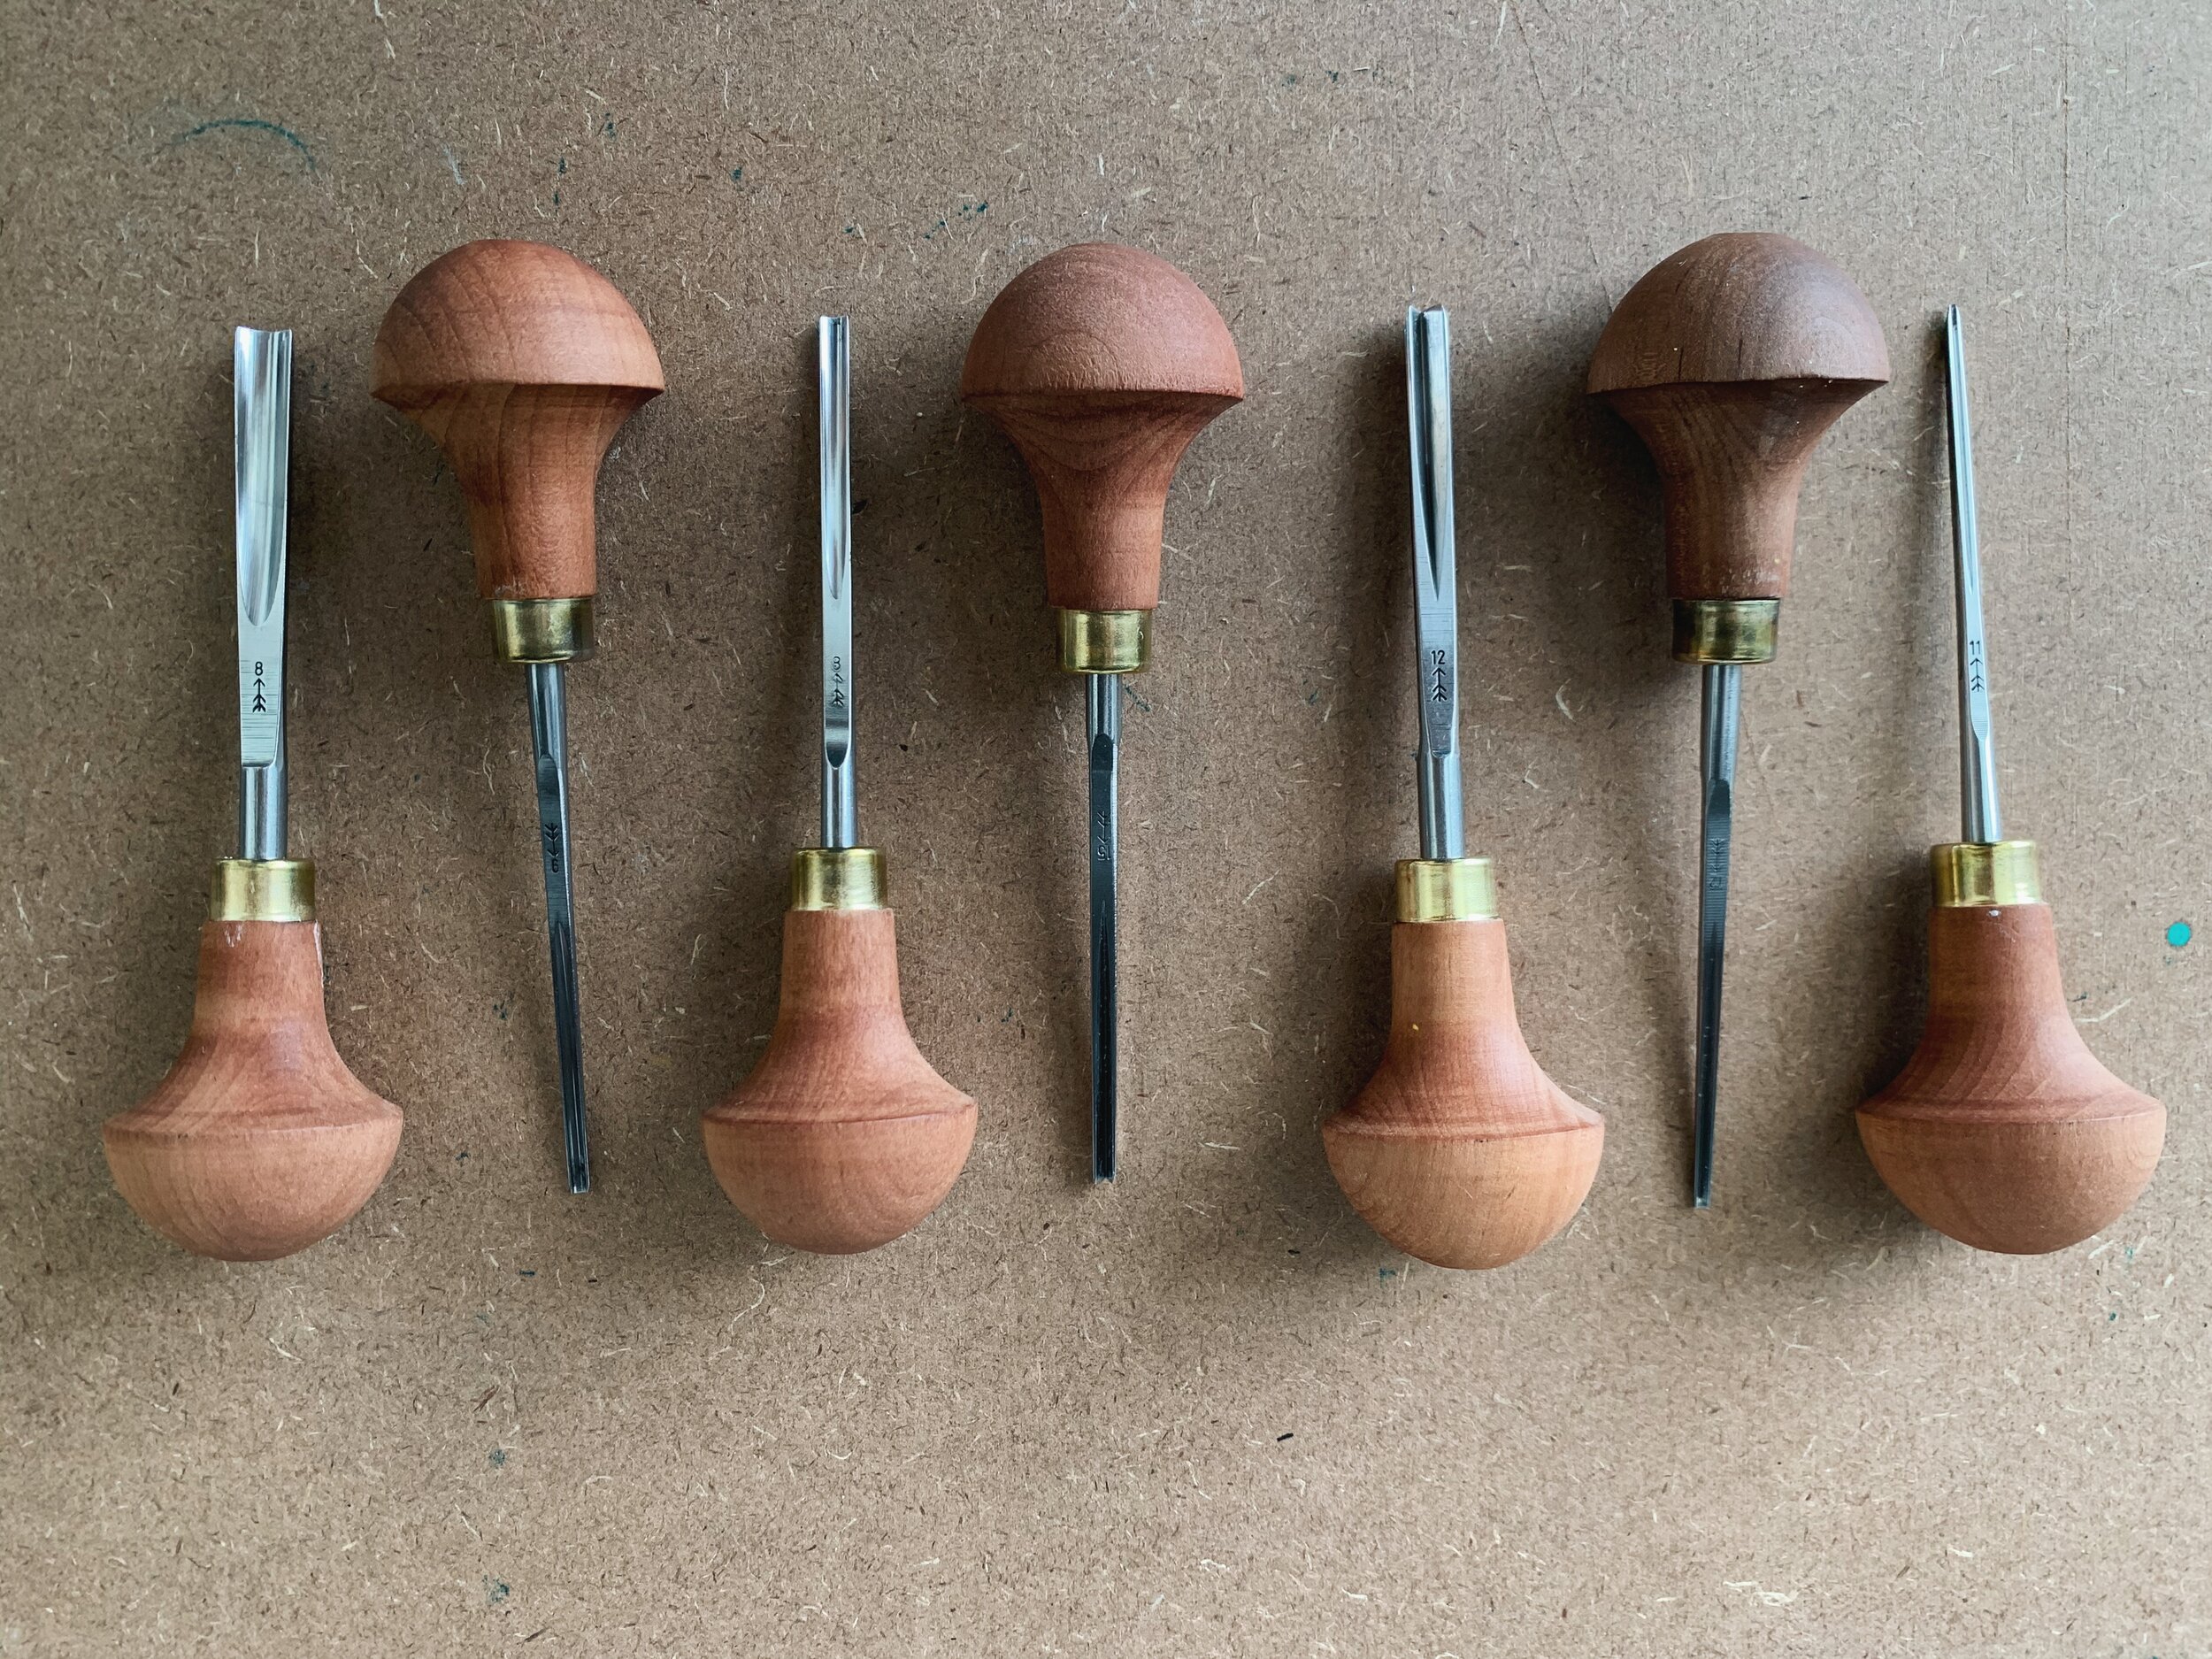 Sharpening Lino Tools 